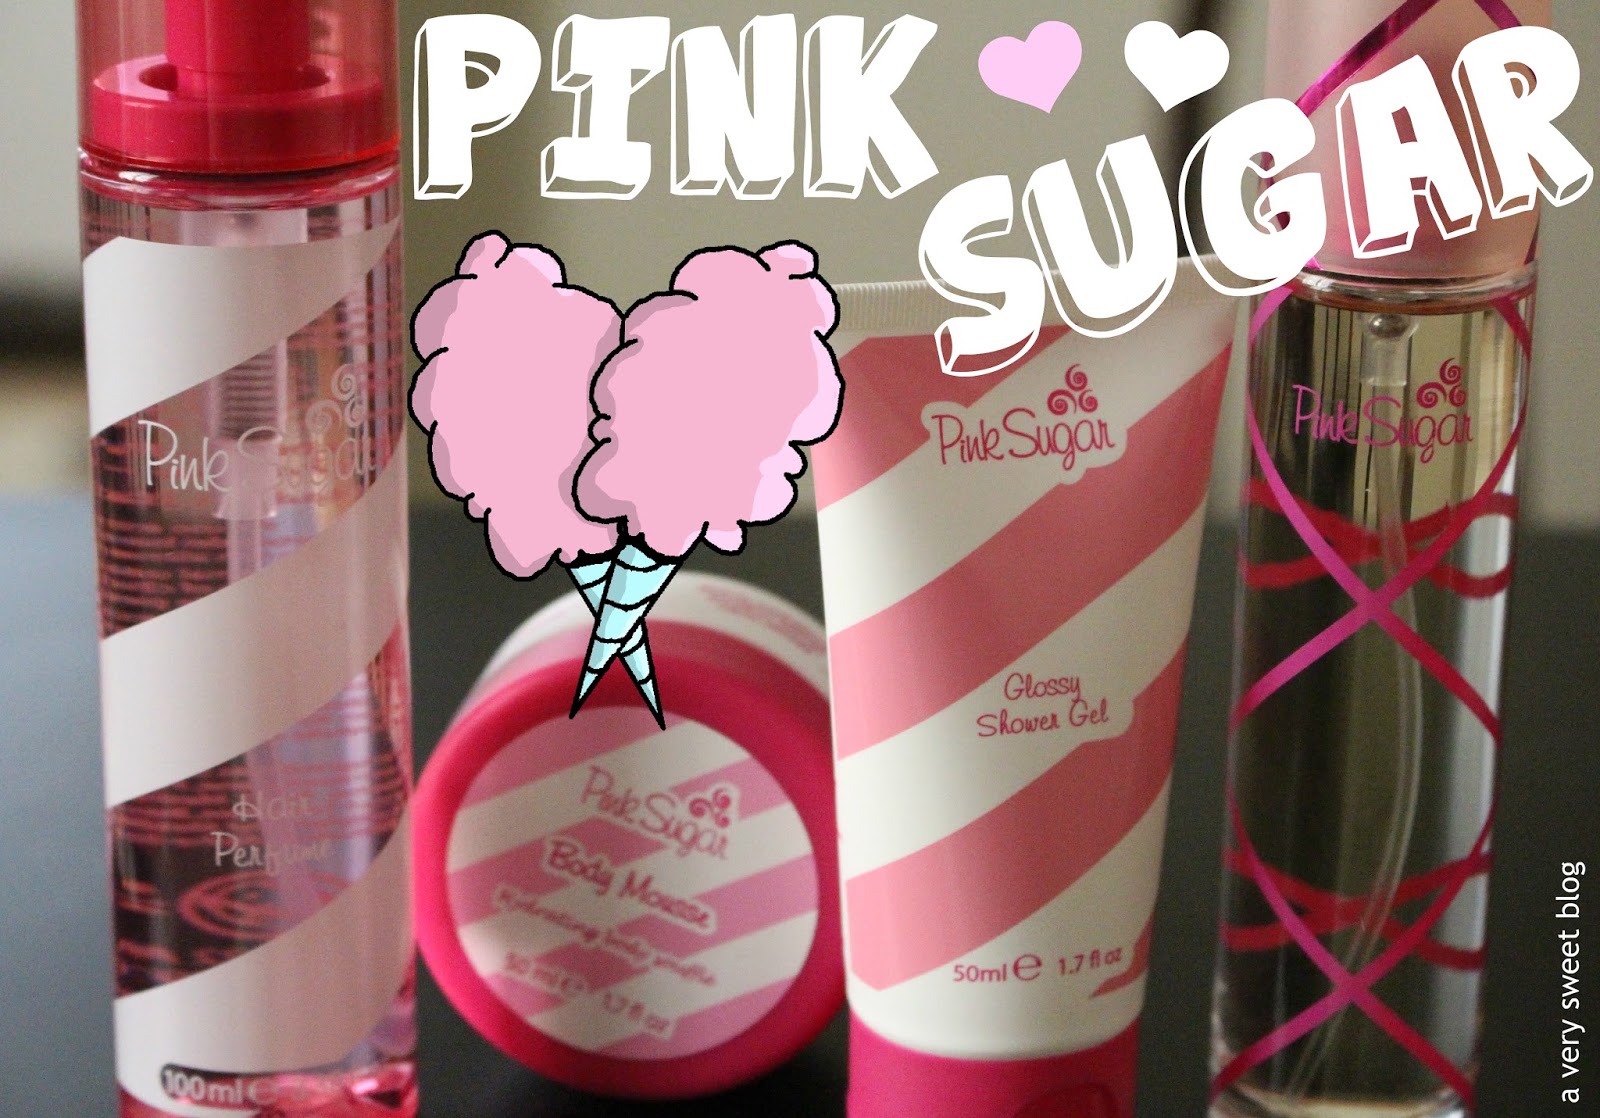 Pink sugar webcam